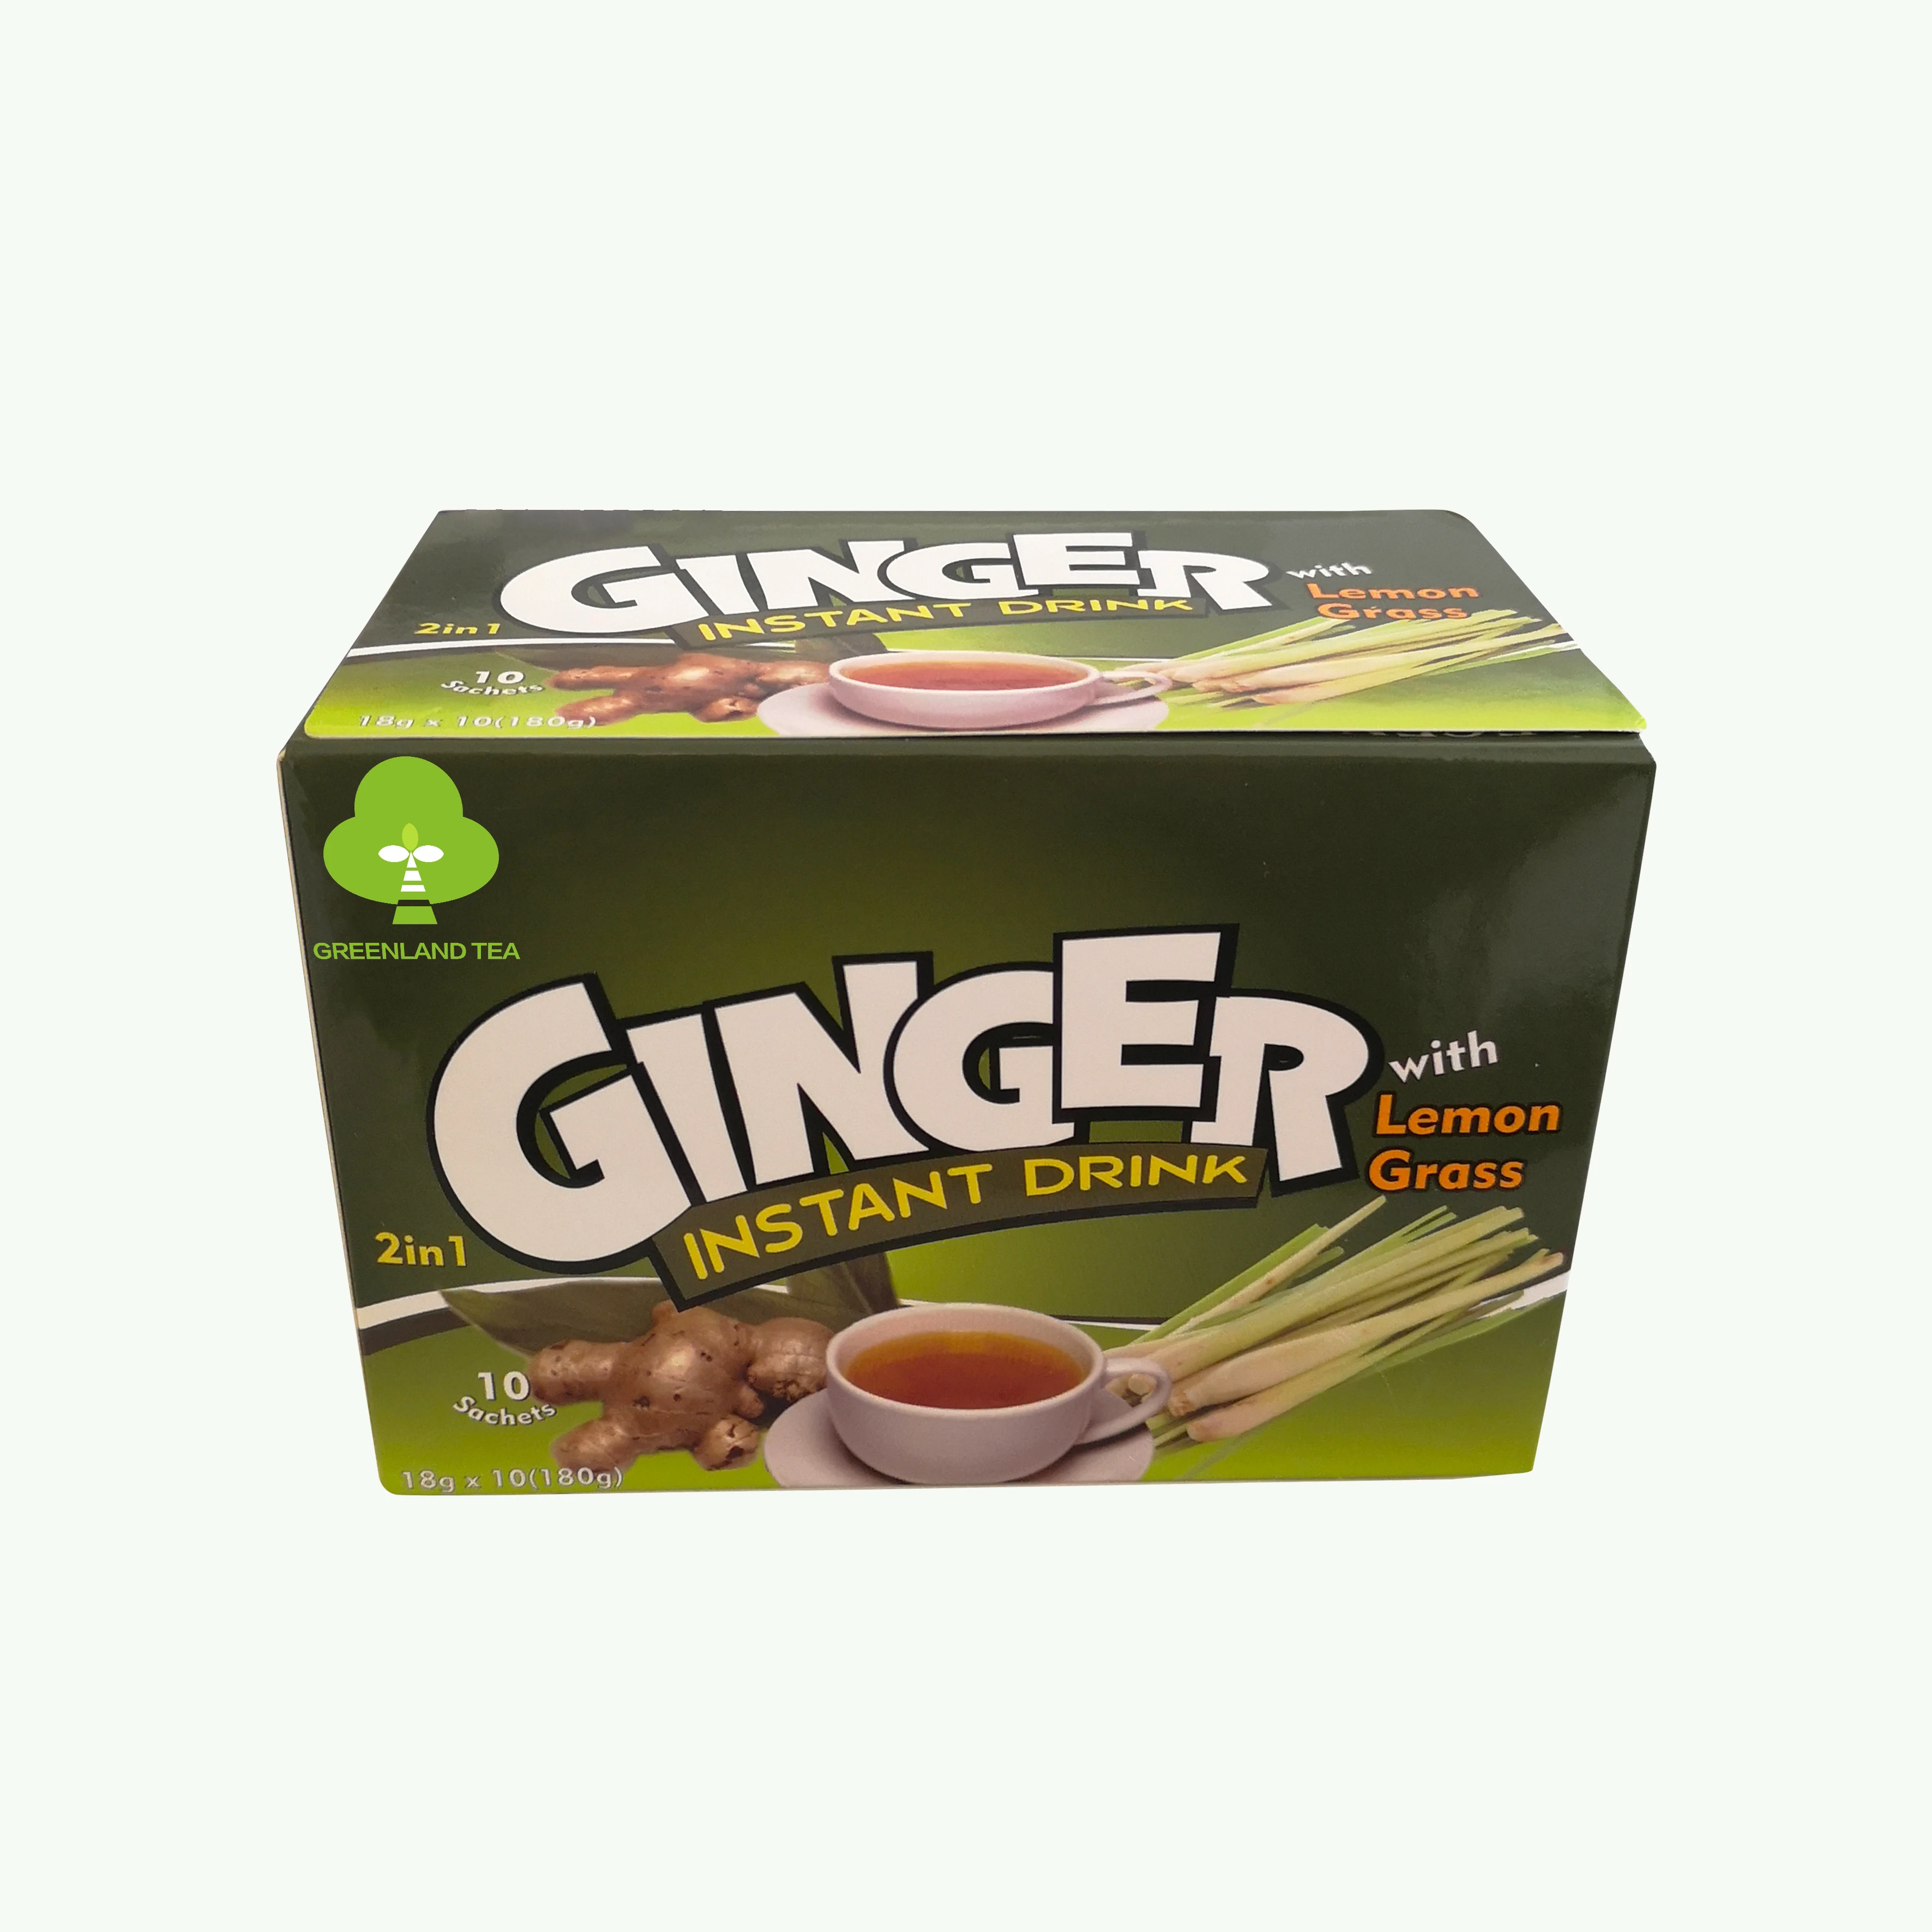 Sugar free ginger tea, choose high quality erythritol or xylitol